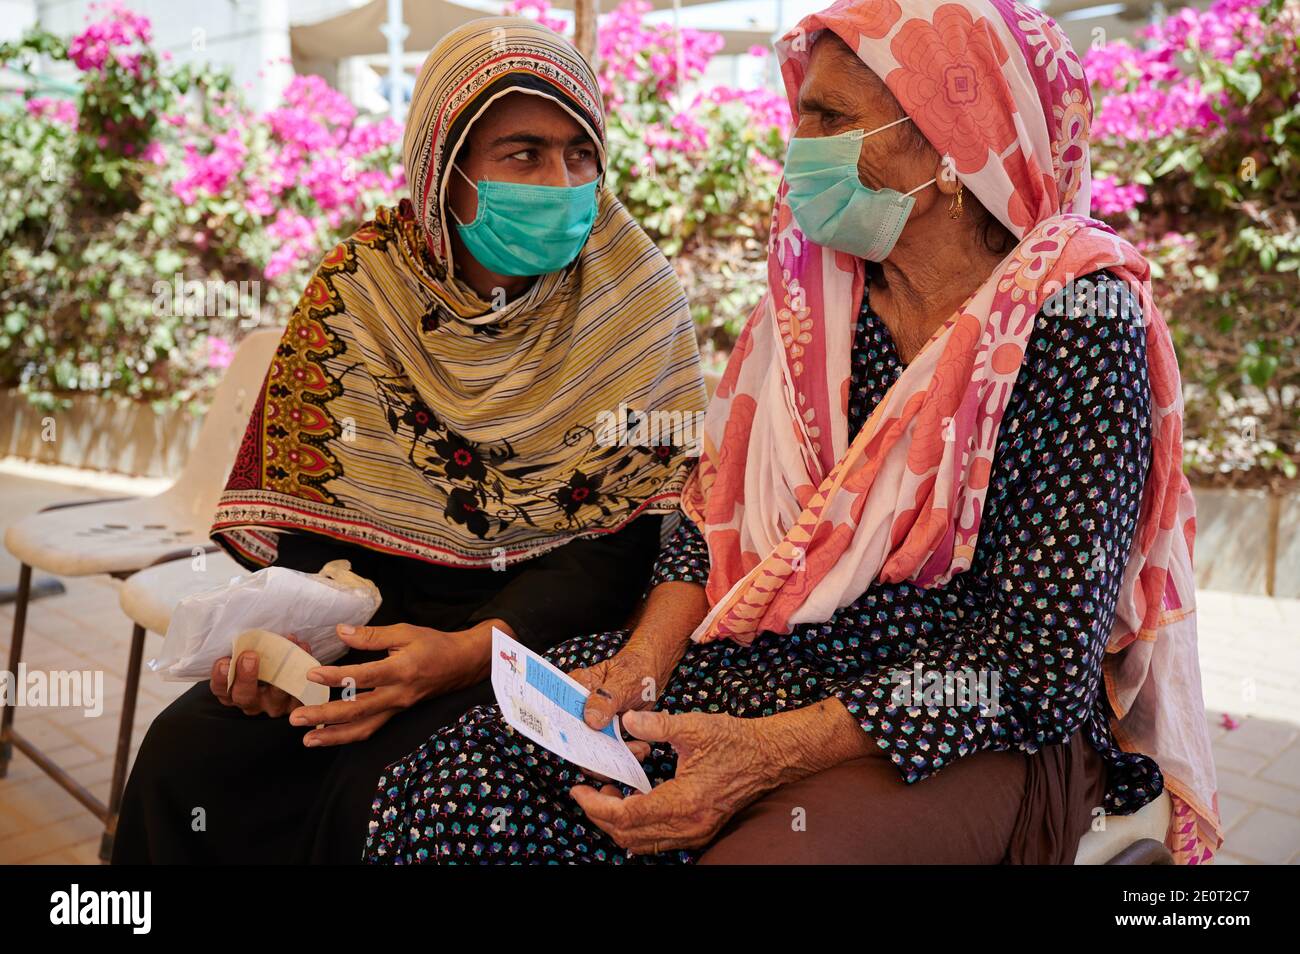 Amidst the coronavirus pandemic, Shehnaz, speaks with her aunt Kaneez Fatima, 60, a TB client regarding a coronavirus test, at the Gori TB Clinic at the Indus Hospital in Korangi, Karachi, Pakistan. Stock Photo